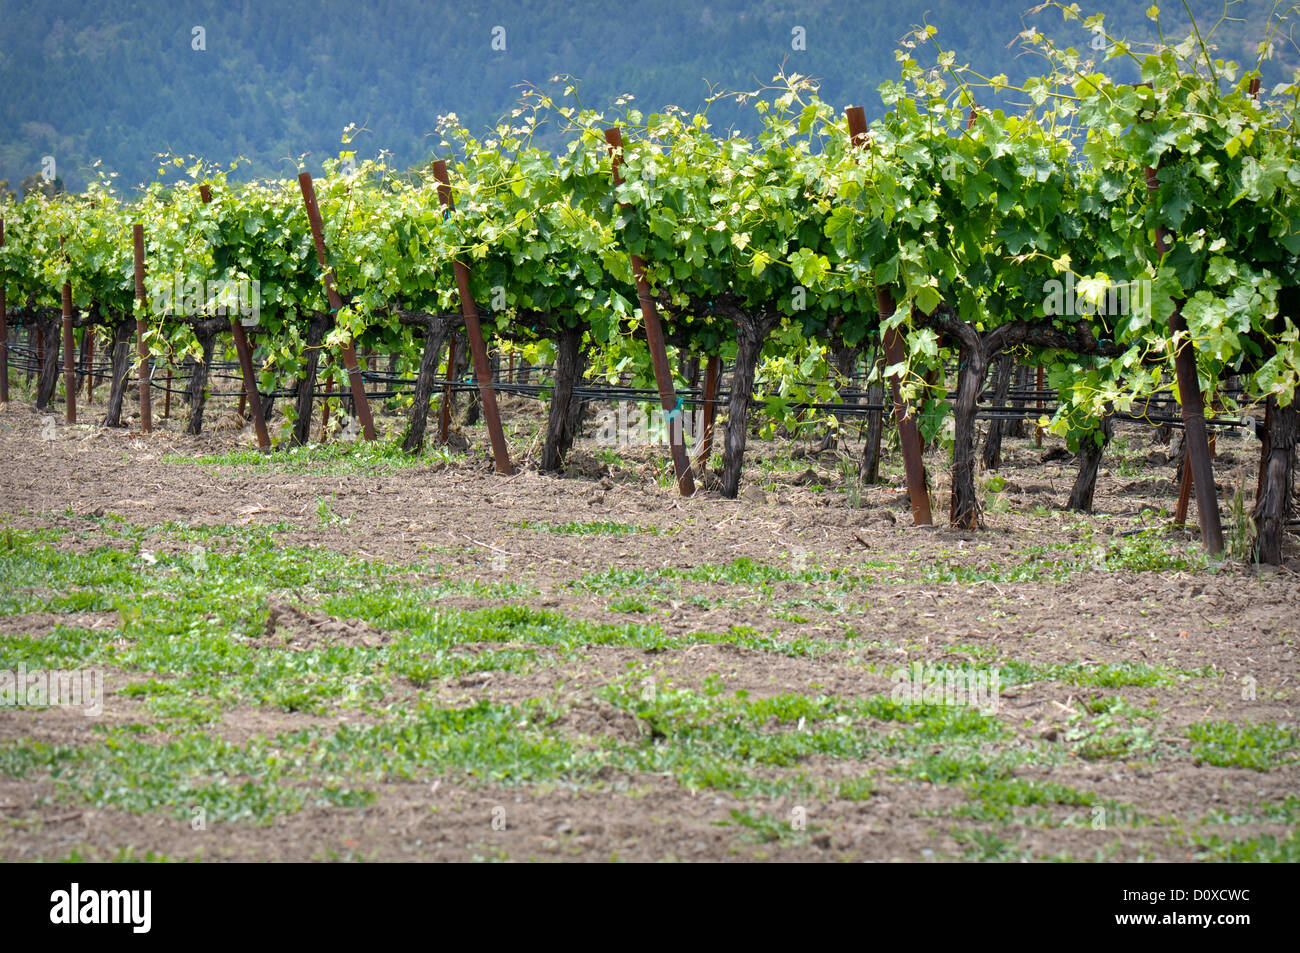 Rows of Grape Vines in Napa Valley California Stock Photo